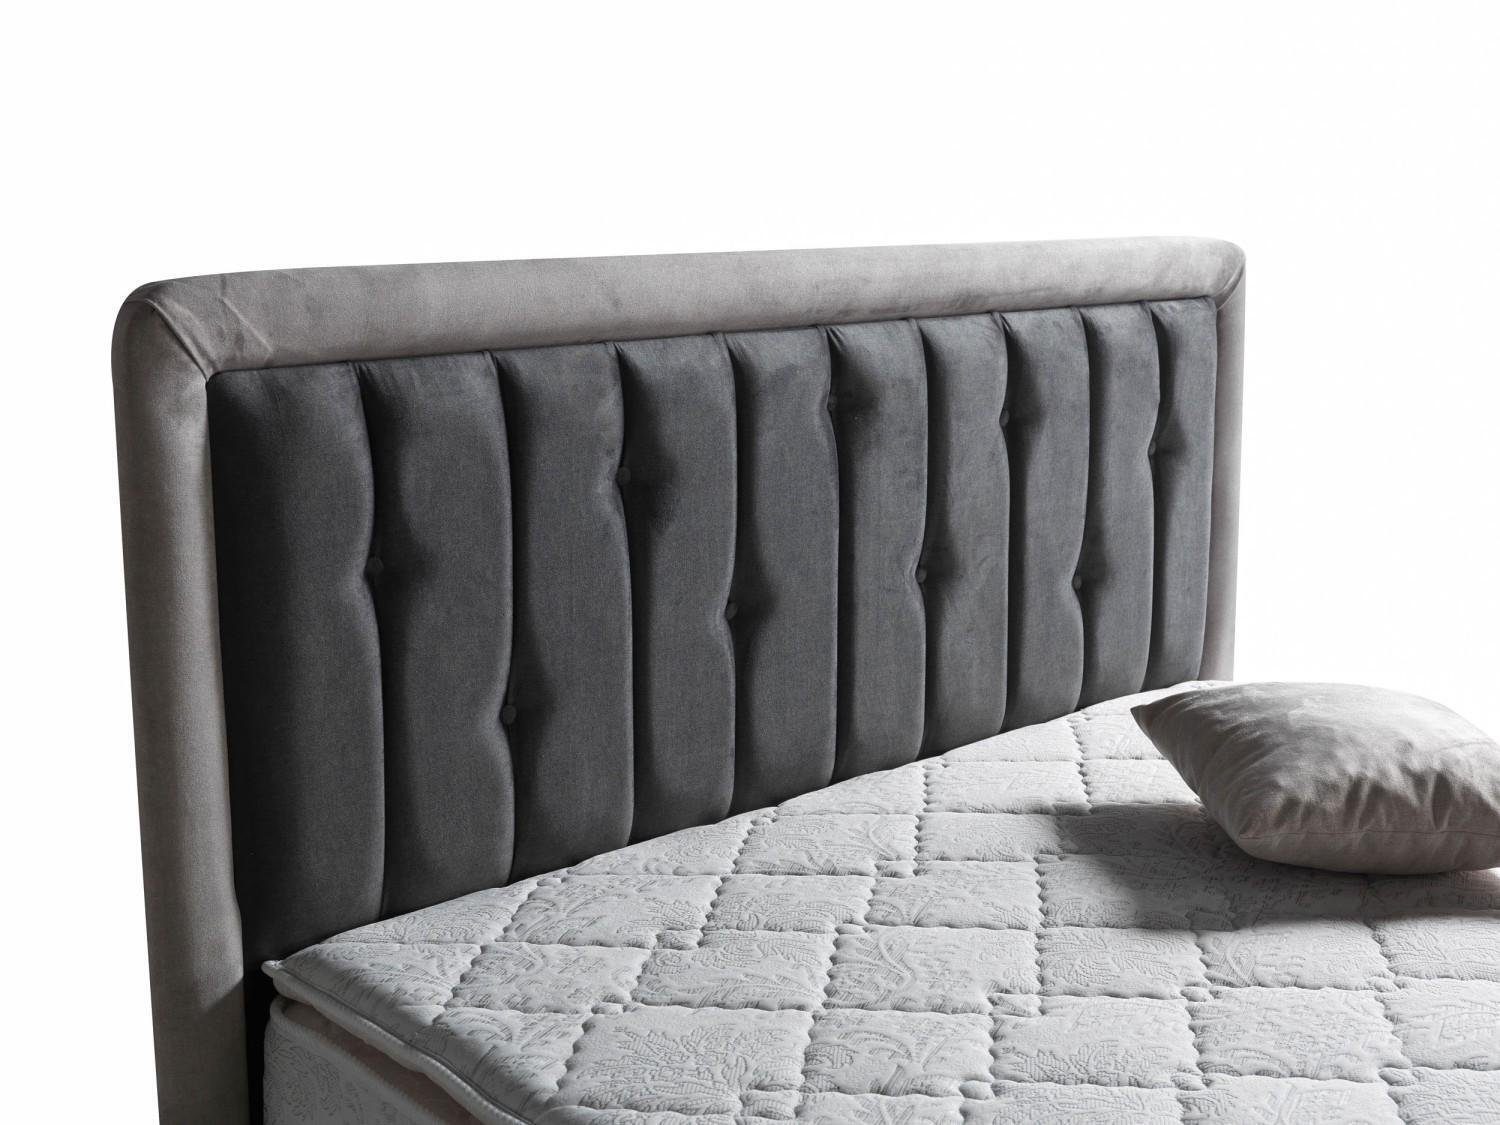 JVmoebel Bett Bett Design Doppelbett Schlafzimmer Europe In Luxus Made Möbel 180x200 Polster Betten (Bett)